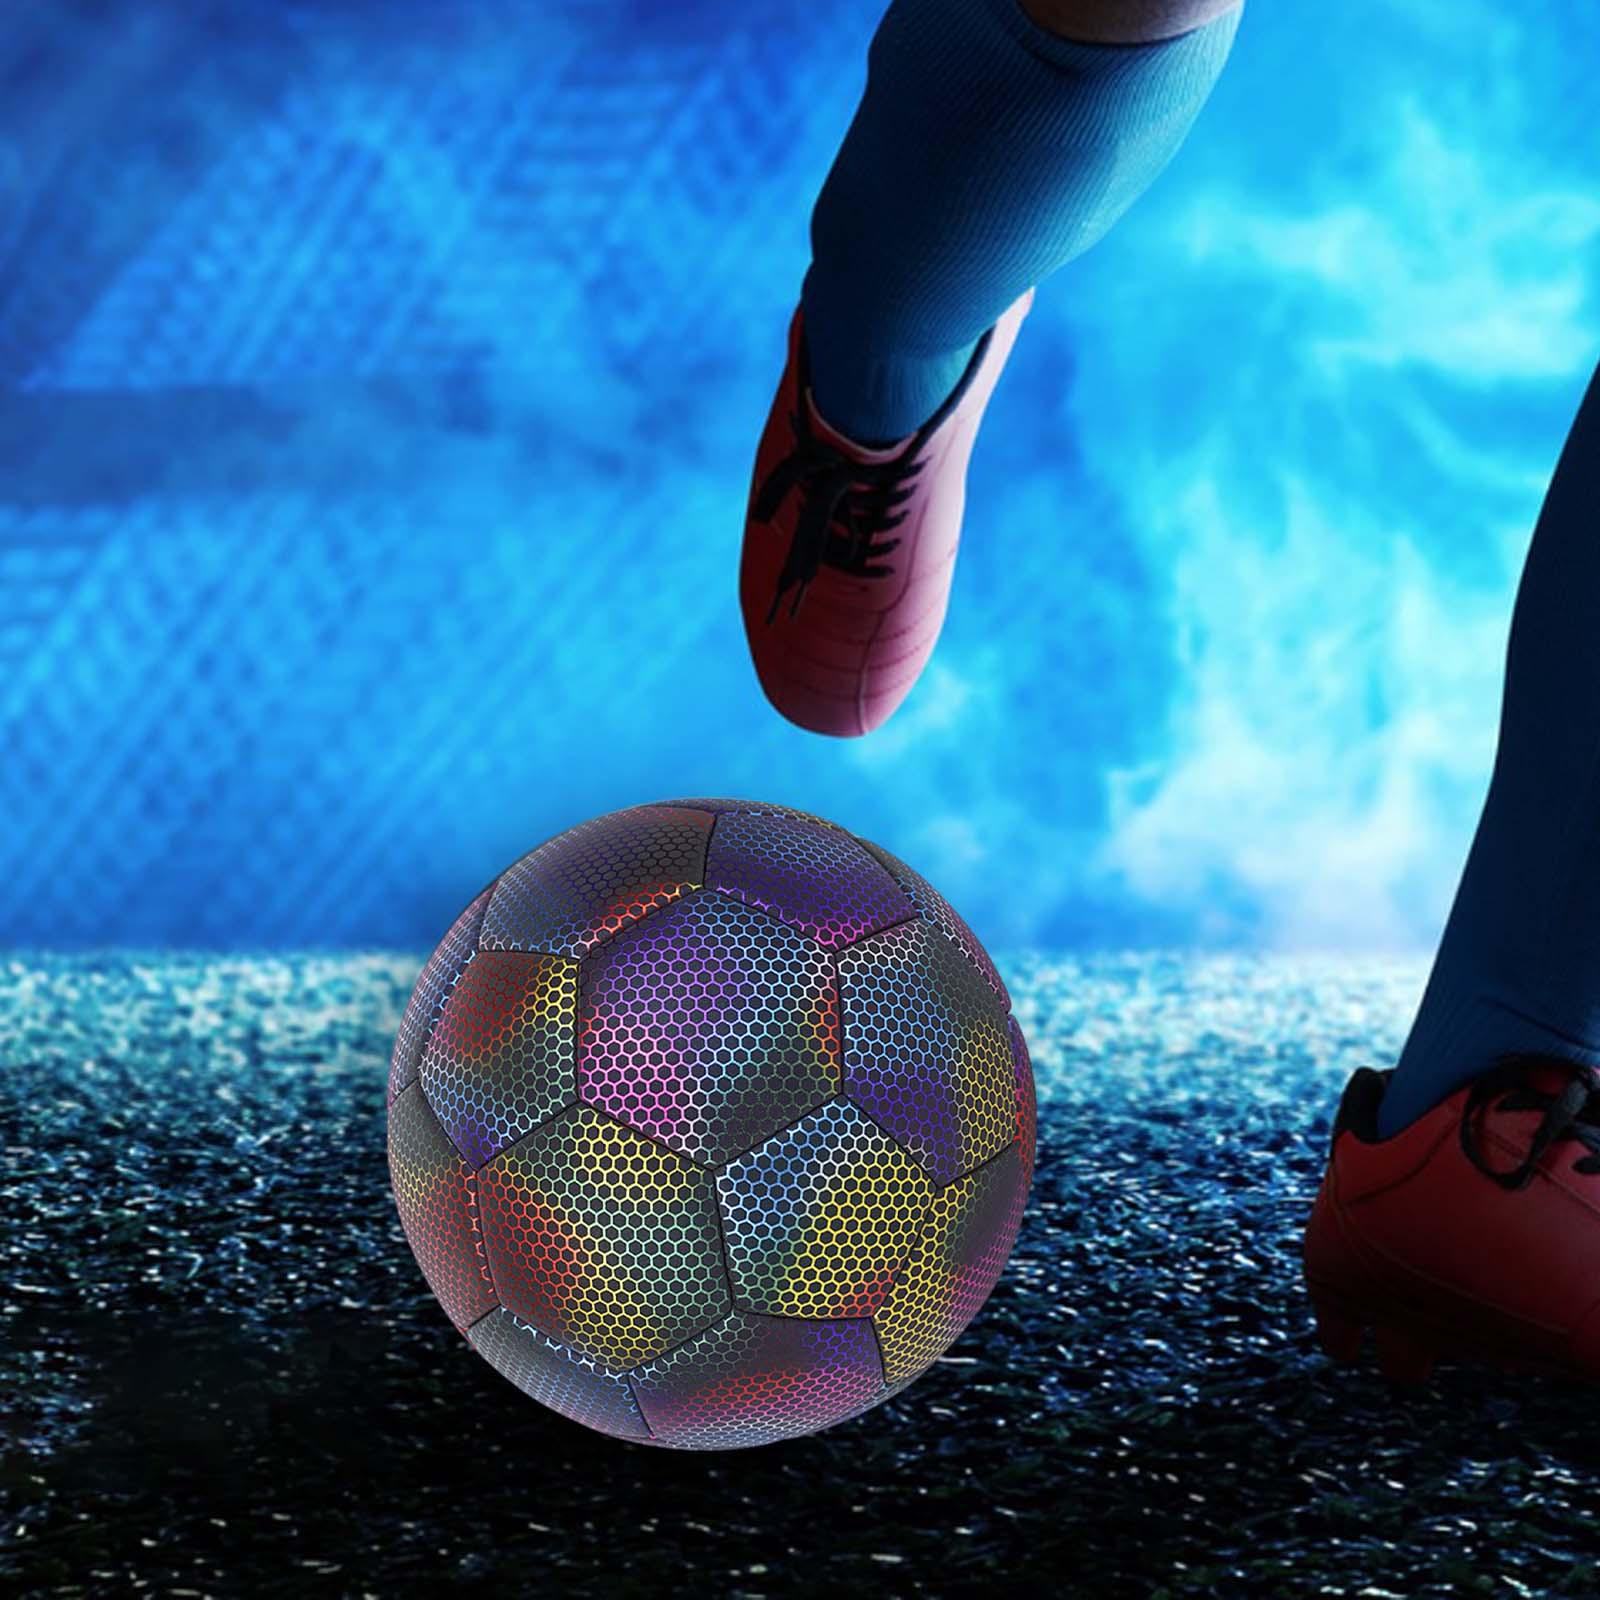 Holographic Reflective Soccer Ball Luminous Official Match Ball for Children